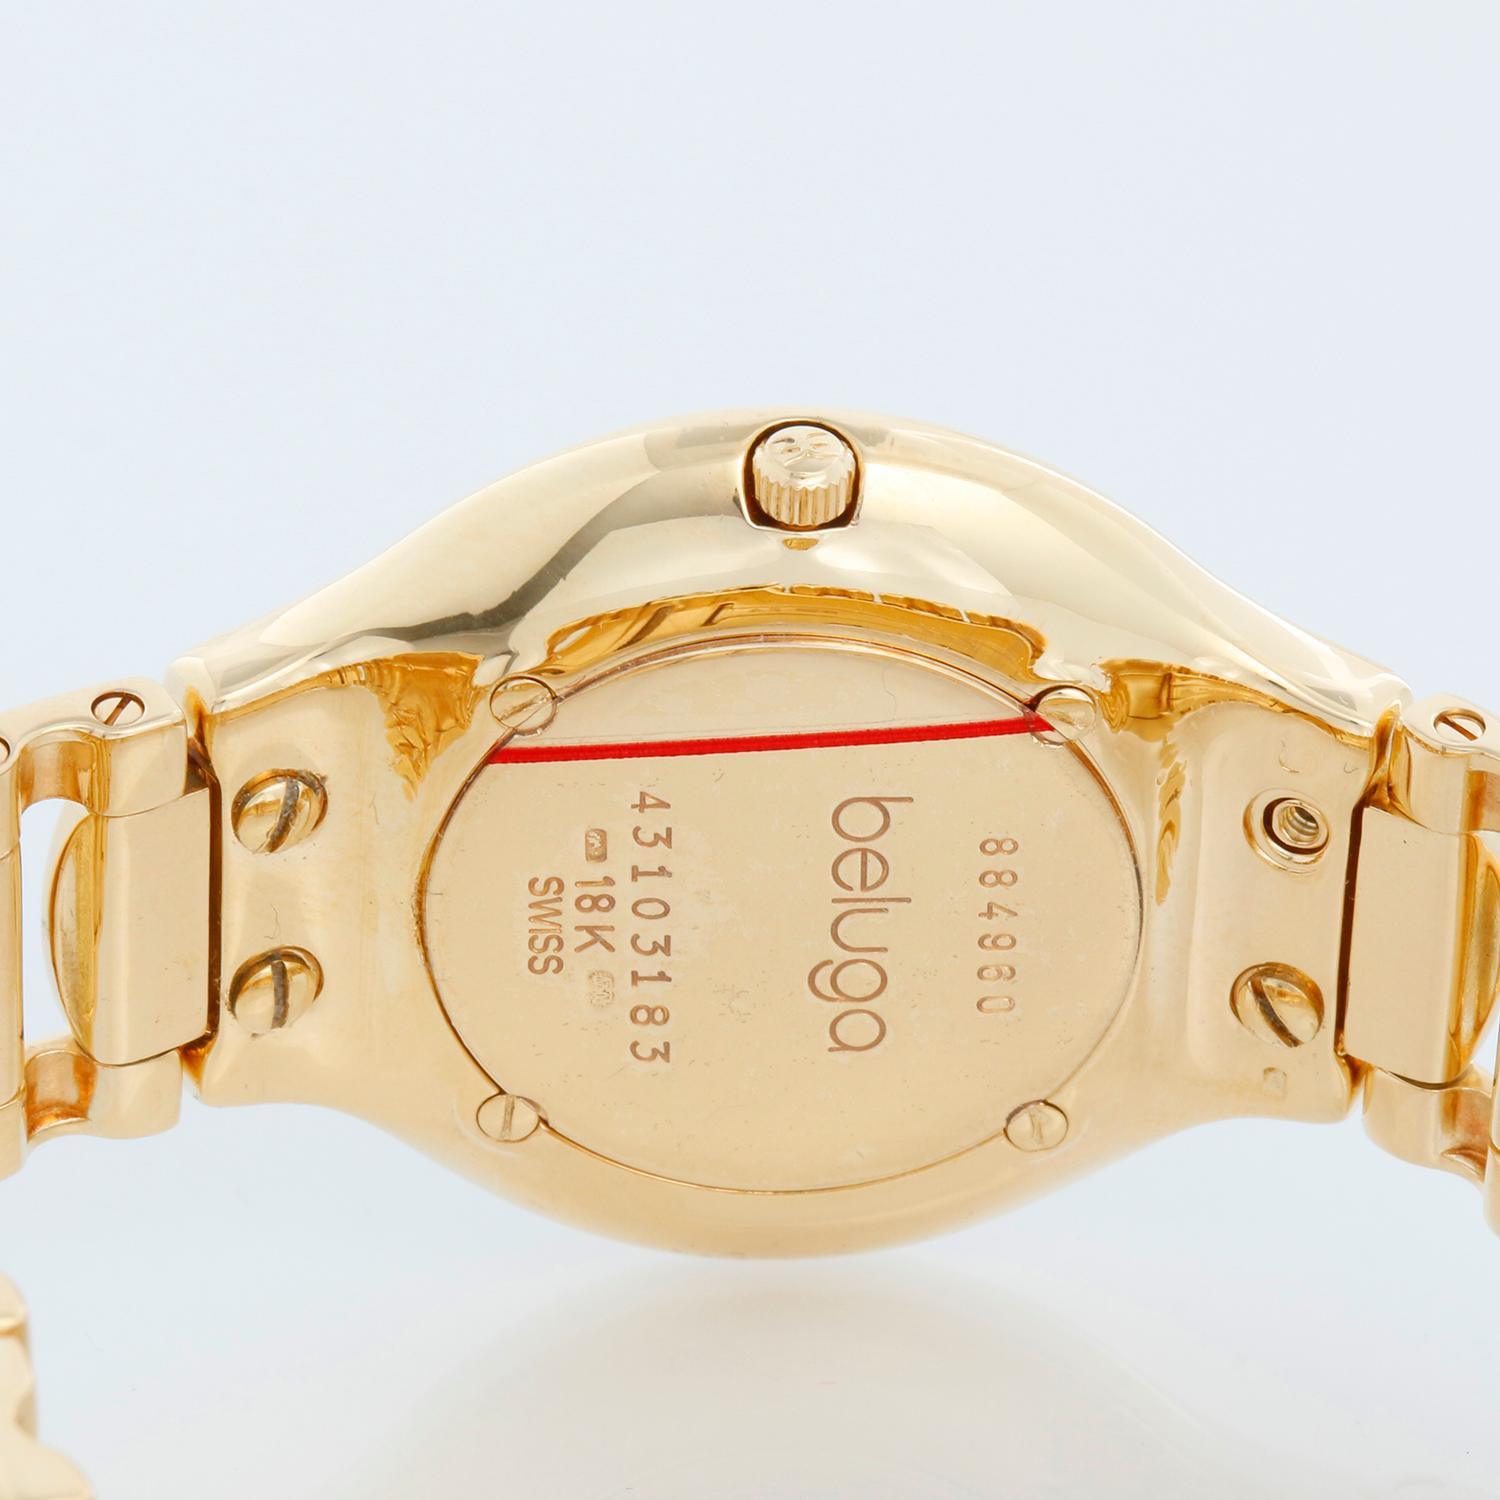 Ebel Beluga 18k Yellow Gold Men's/Ladies 32mm Midsize Quartz Watch 884960 In Excellent Condition For Sale In Dallas, TX